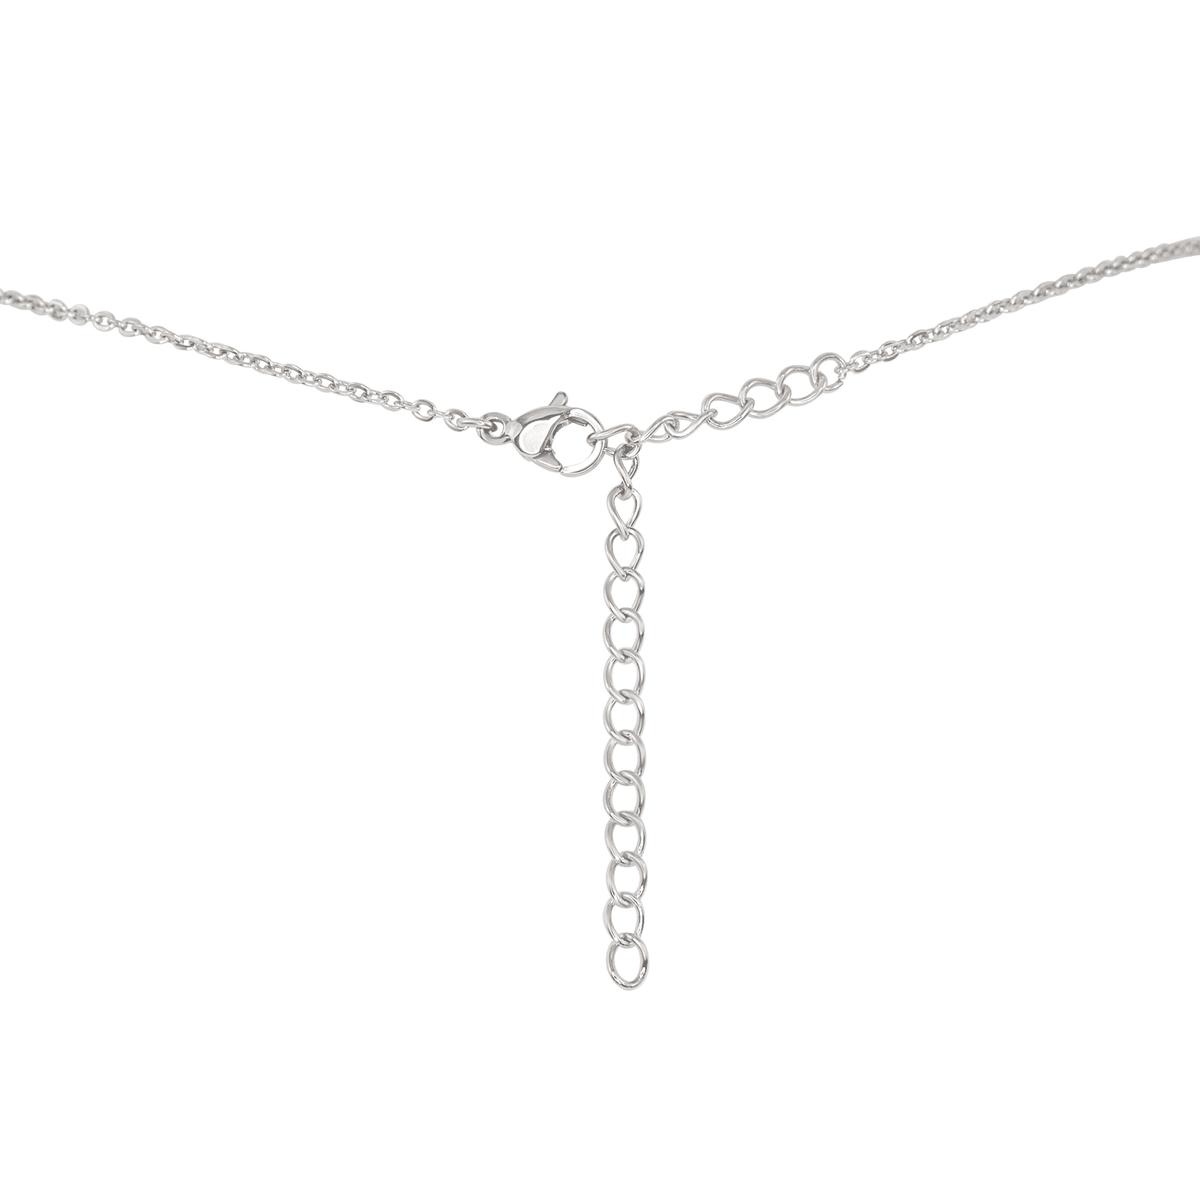 Crystal Quartz Boho Lariat Necklace - Crystal Quartz Boho Lariat Necklace - 14k Gold Fill - Luna Tide Handmade Crystal Jewellery